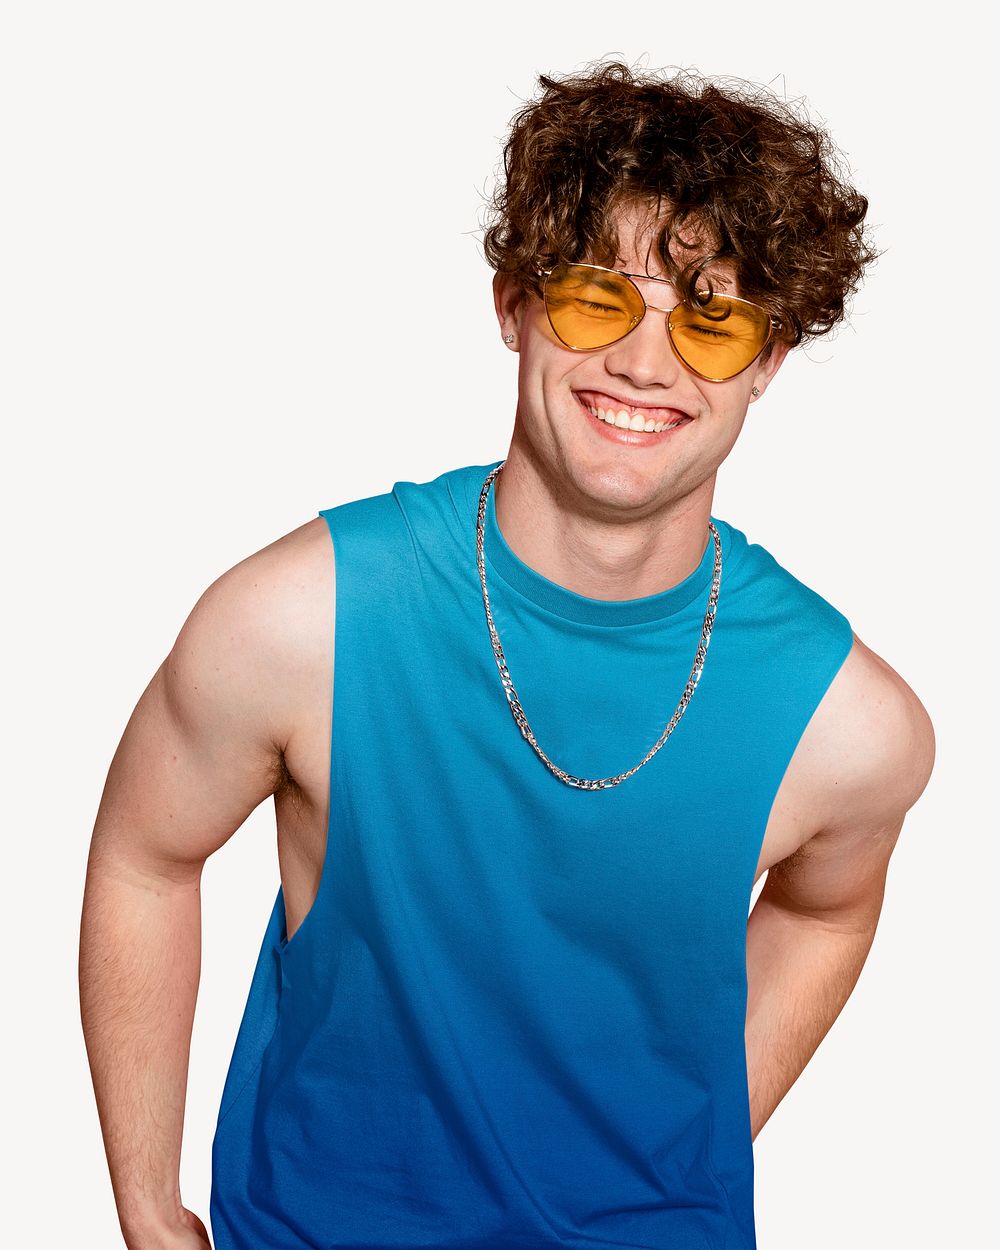 Men's summer tank top mockup, editable apparel & fashion psd